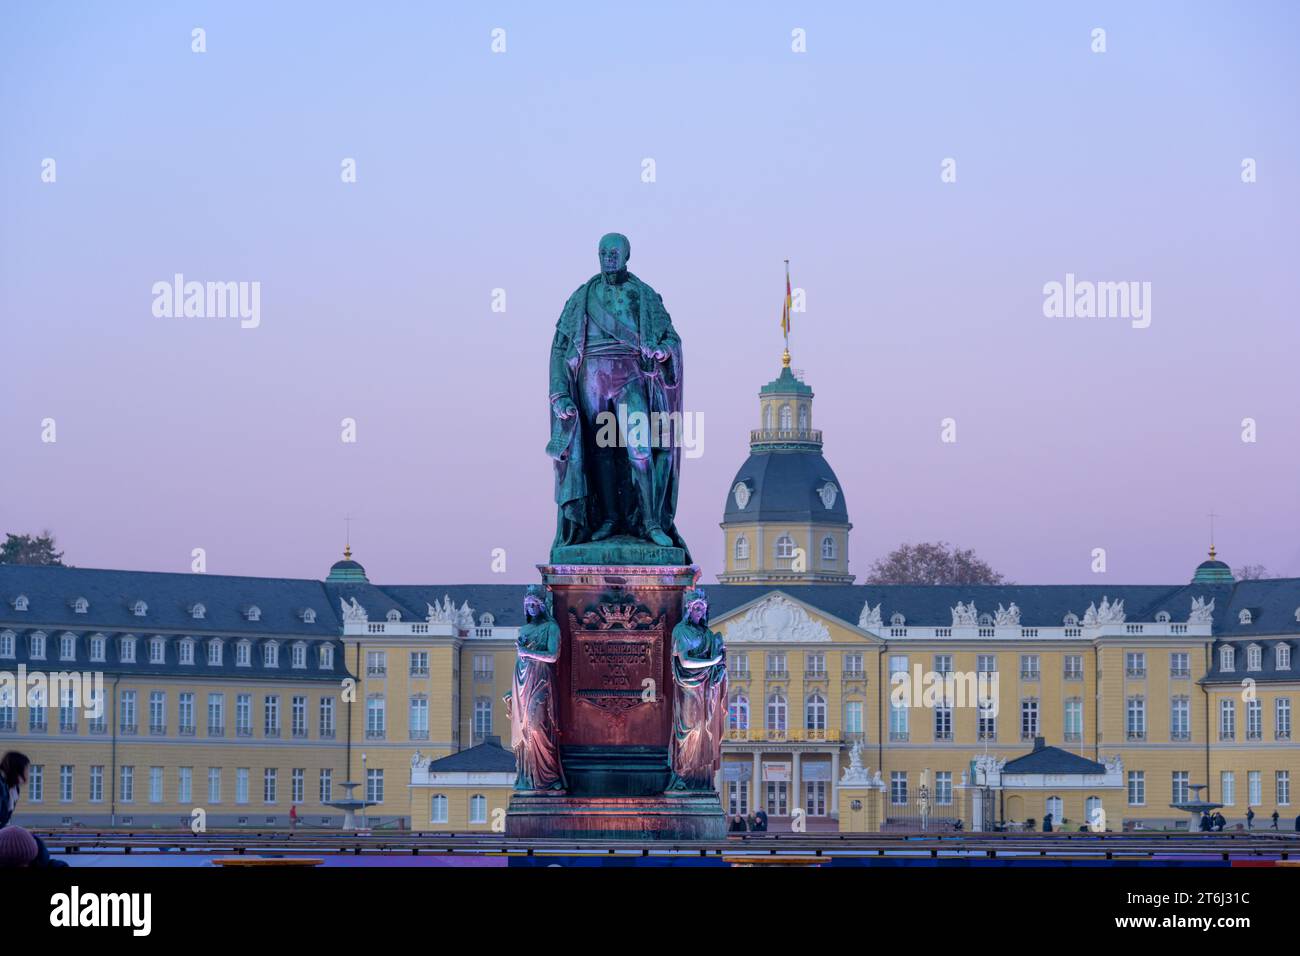 Germany, Baden-Württemberg, Karlsruhe, Karl Friedrich von Baden, statue in front of the castle. Stock Photo